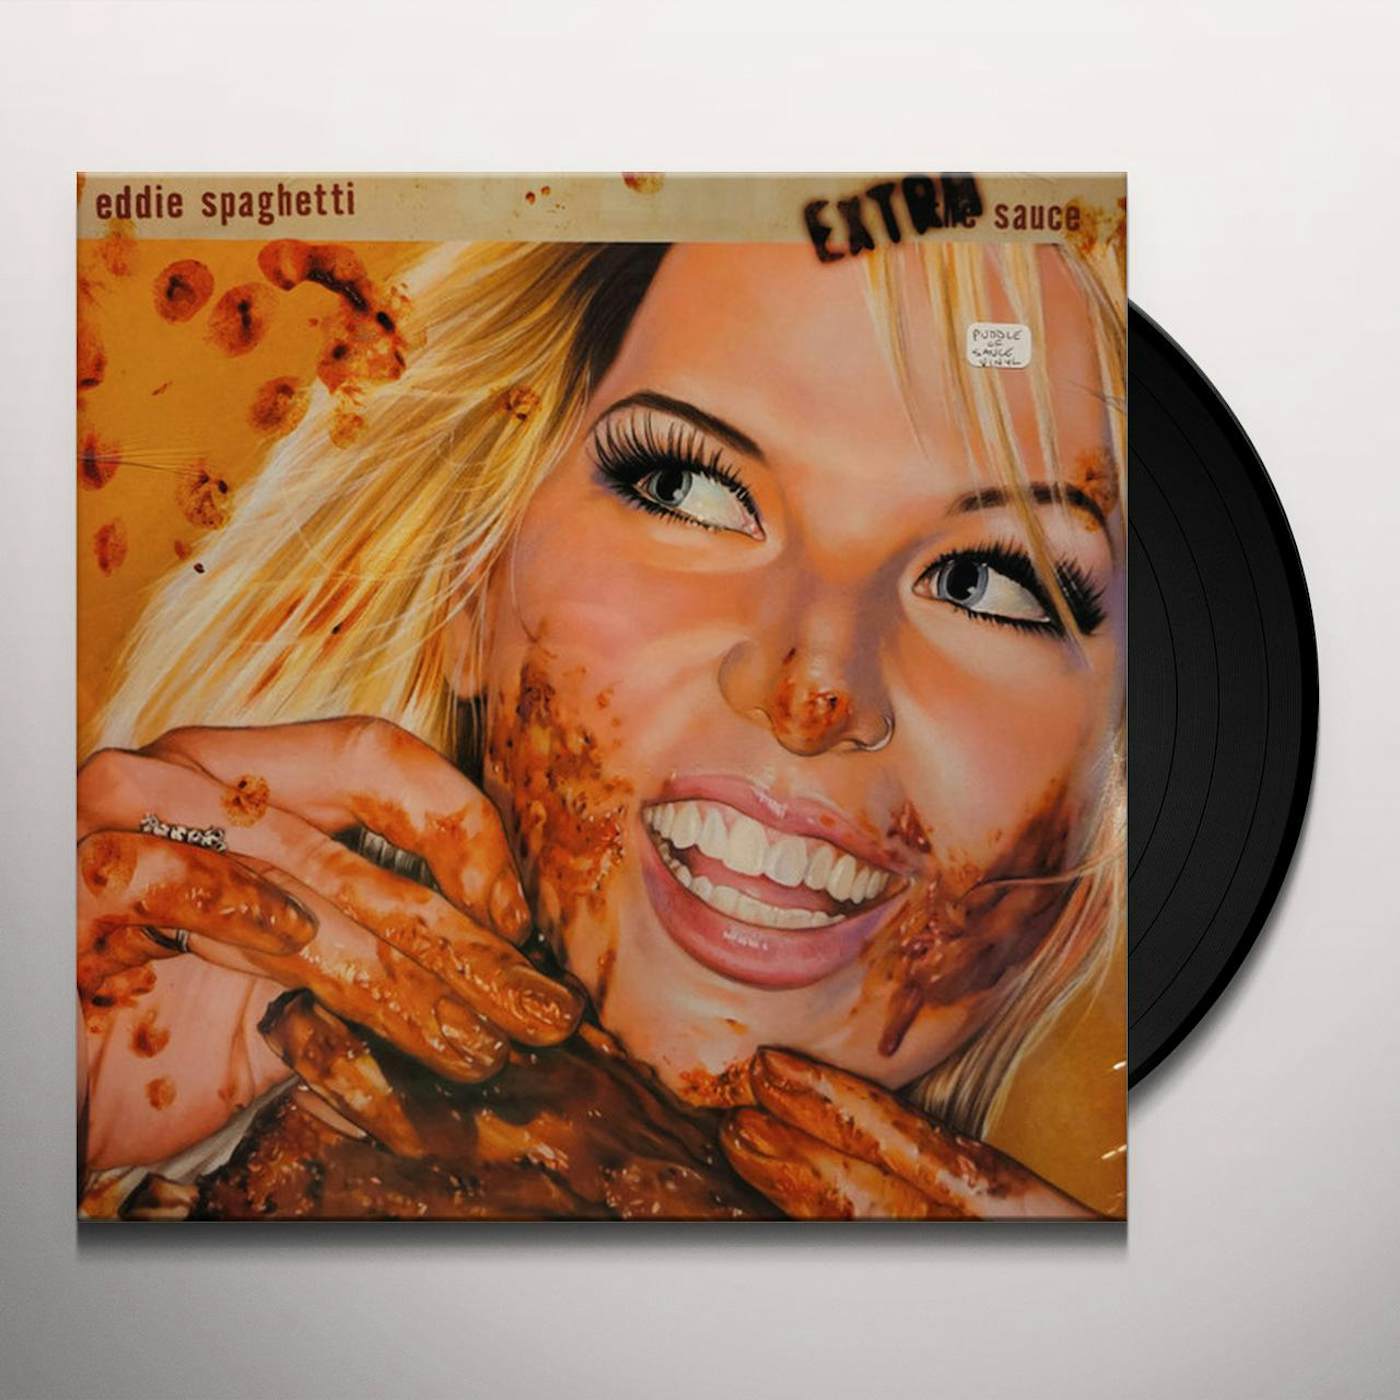 Eddie Spaghetti Extra Sauce Vinyl Record